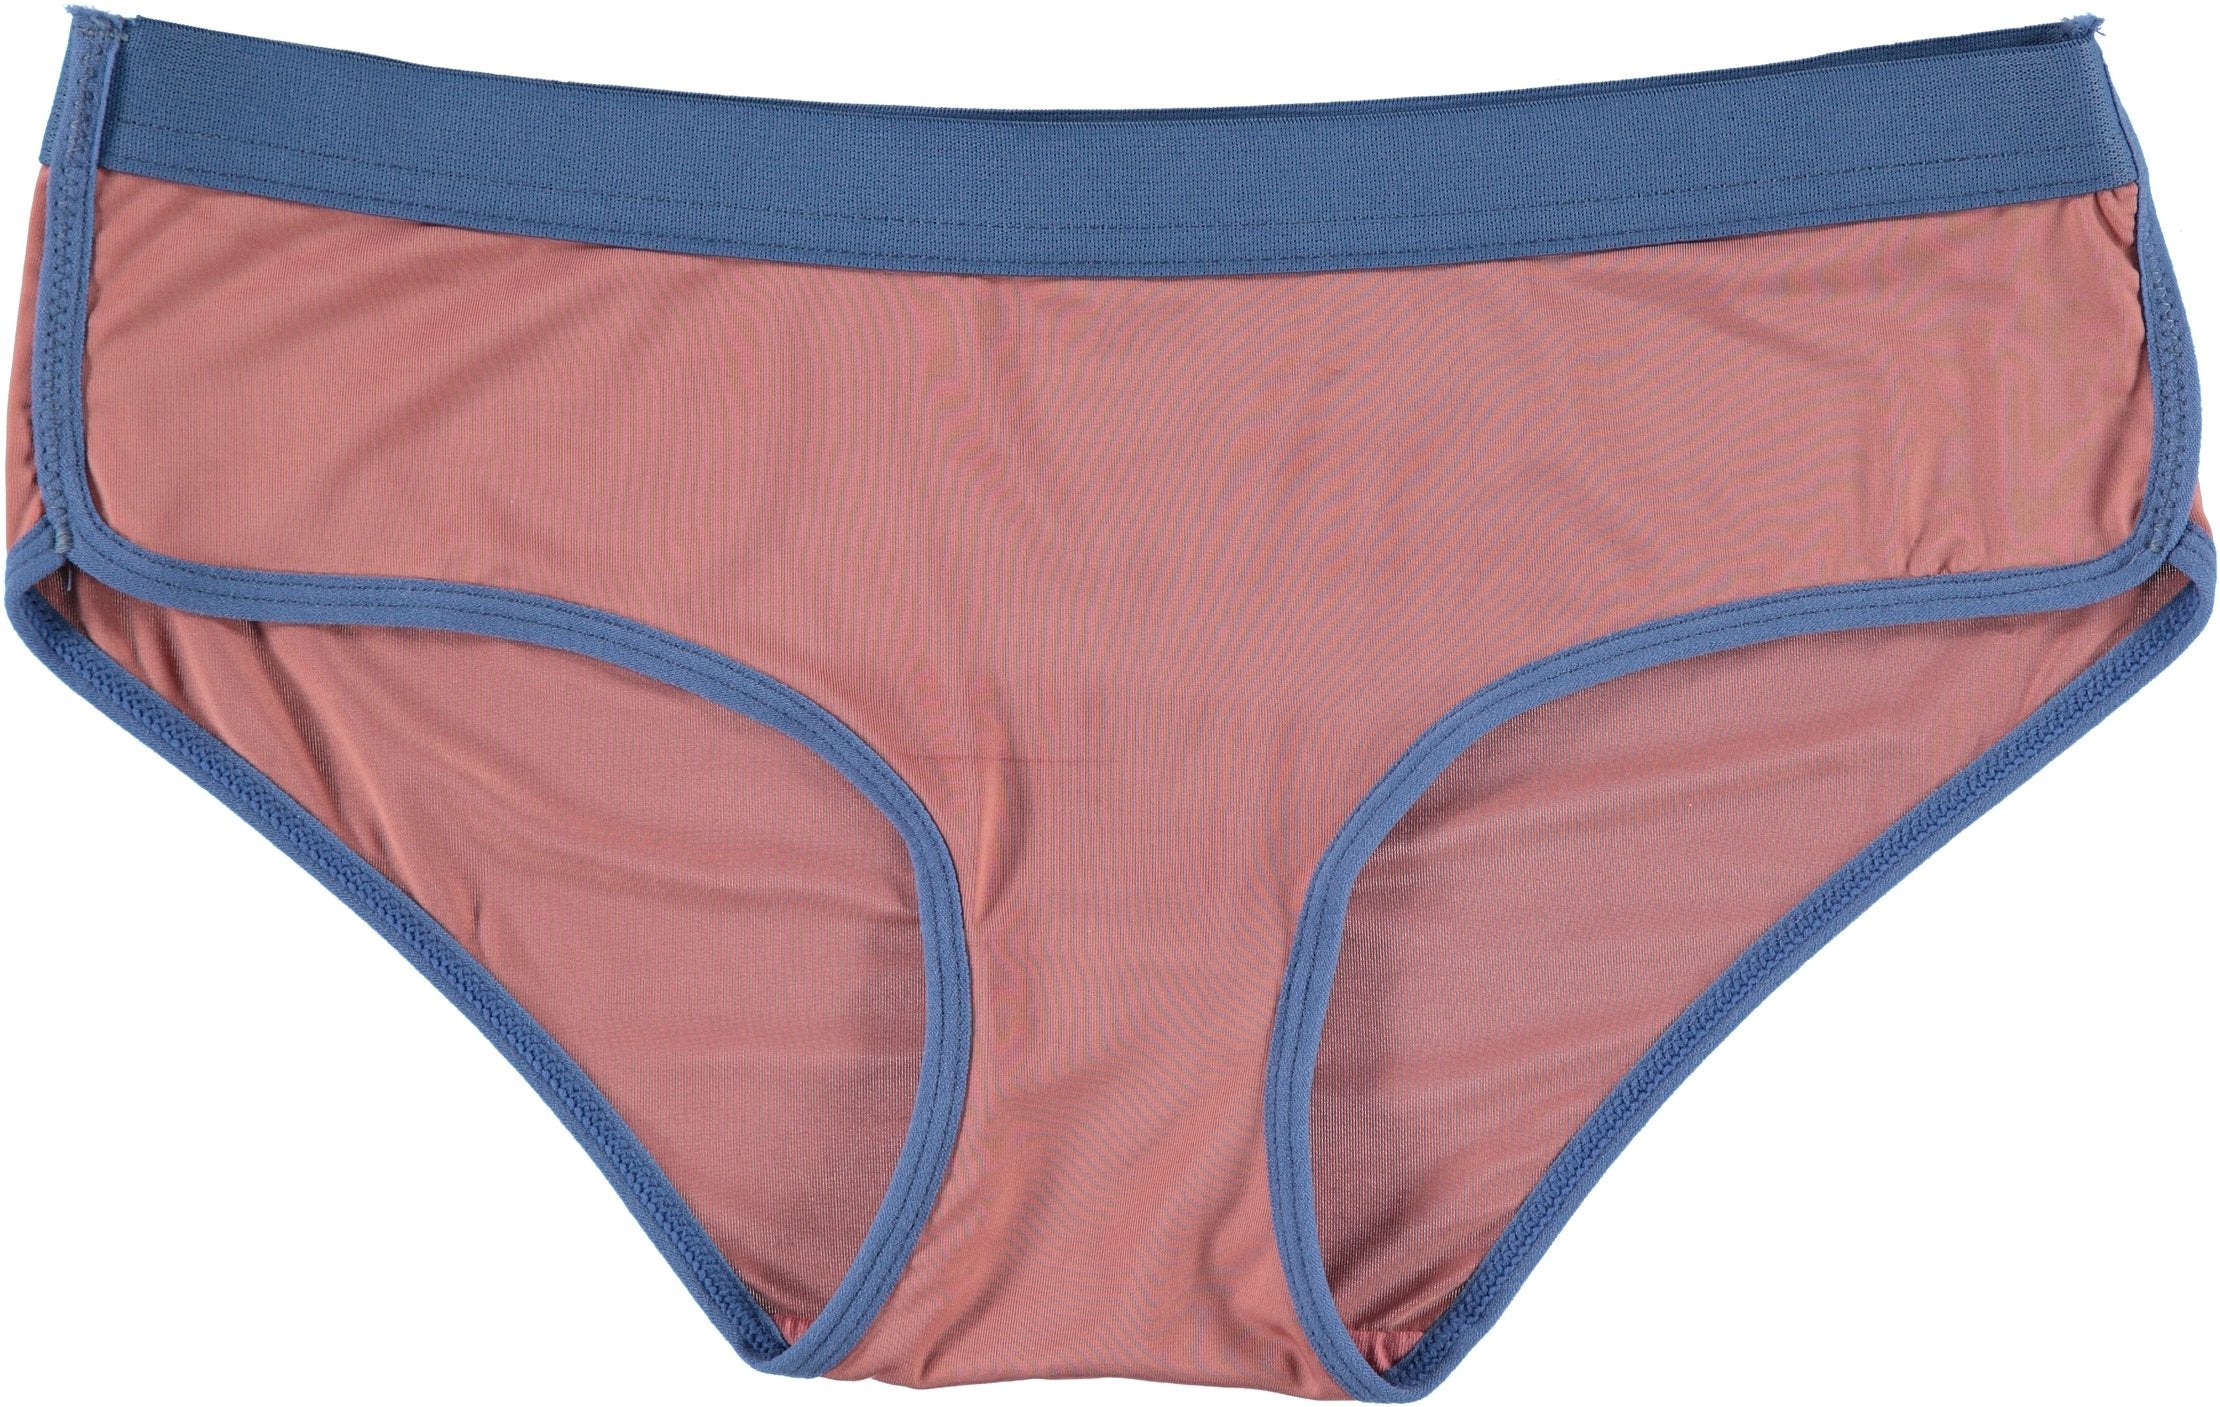 dELiA's Women's Printed/Solid Boyleg Underwear Panty Pack, Soft